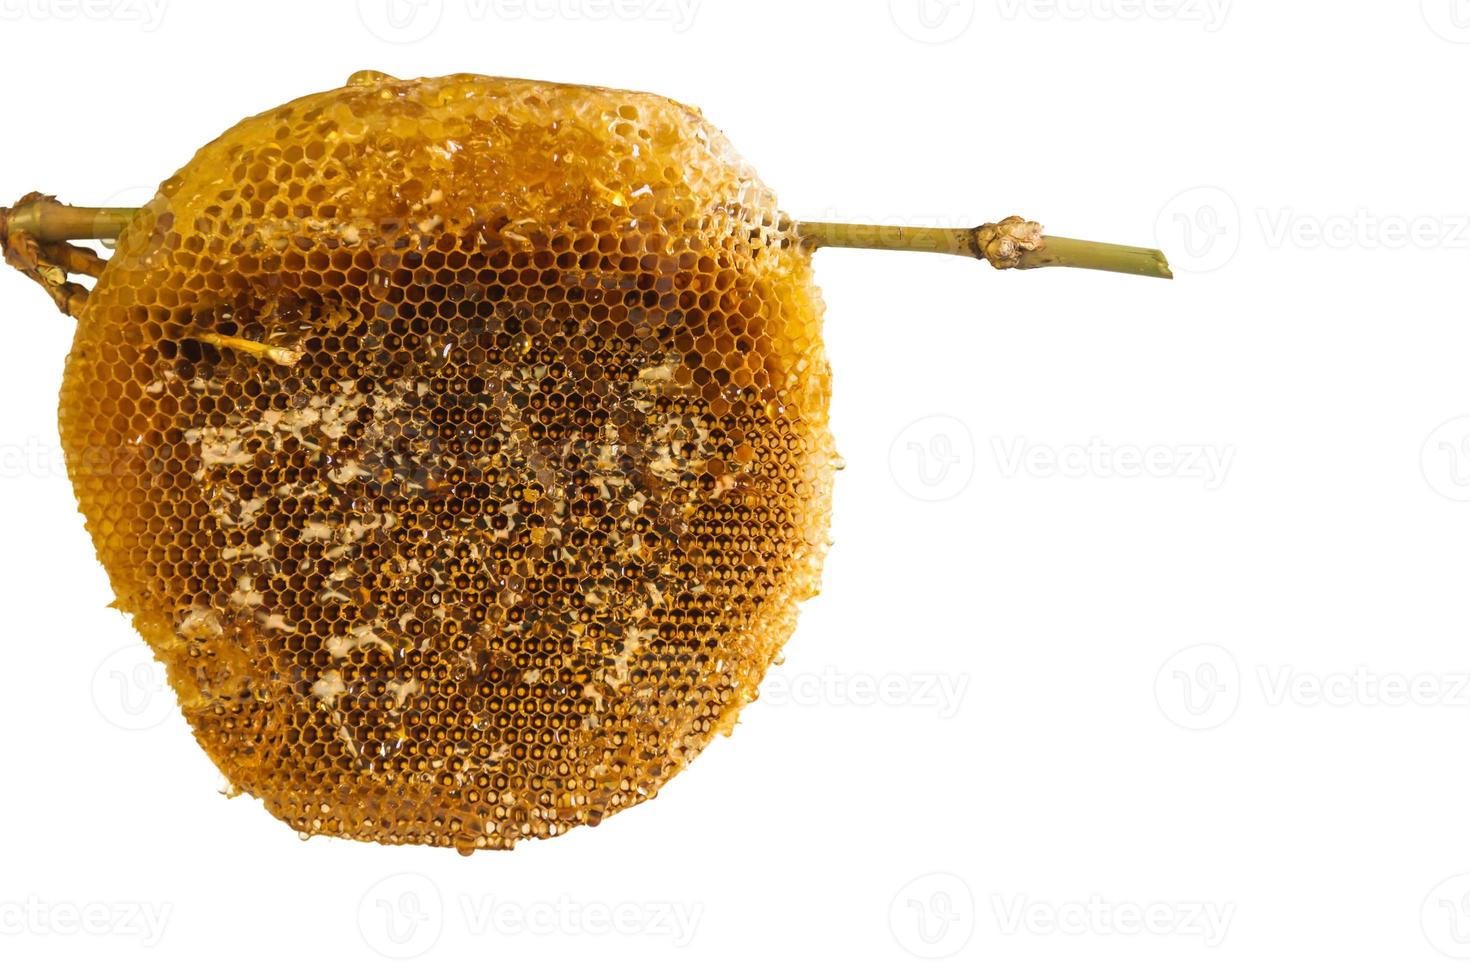 honungskaka med honung. foto